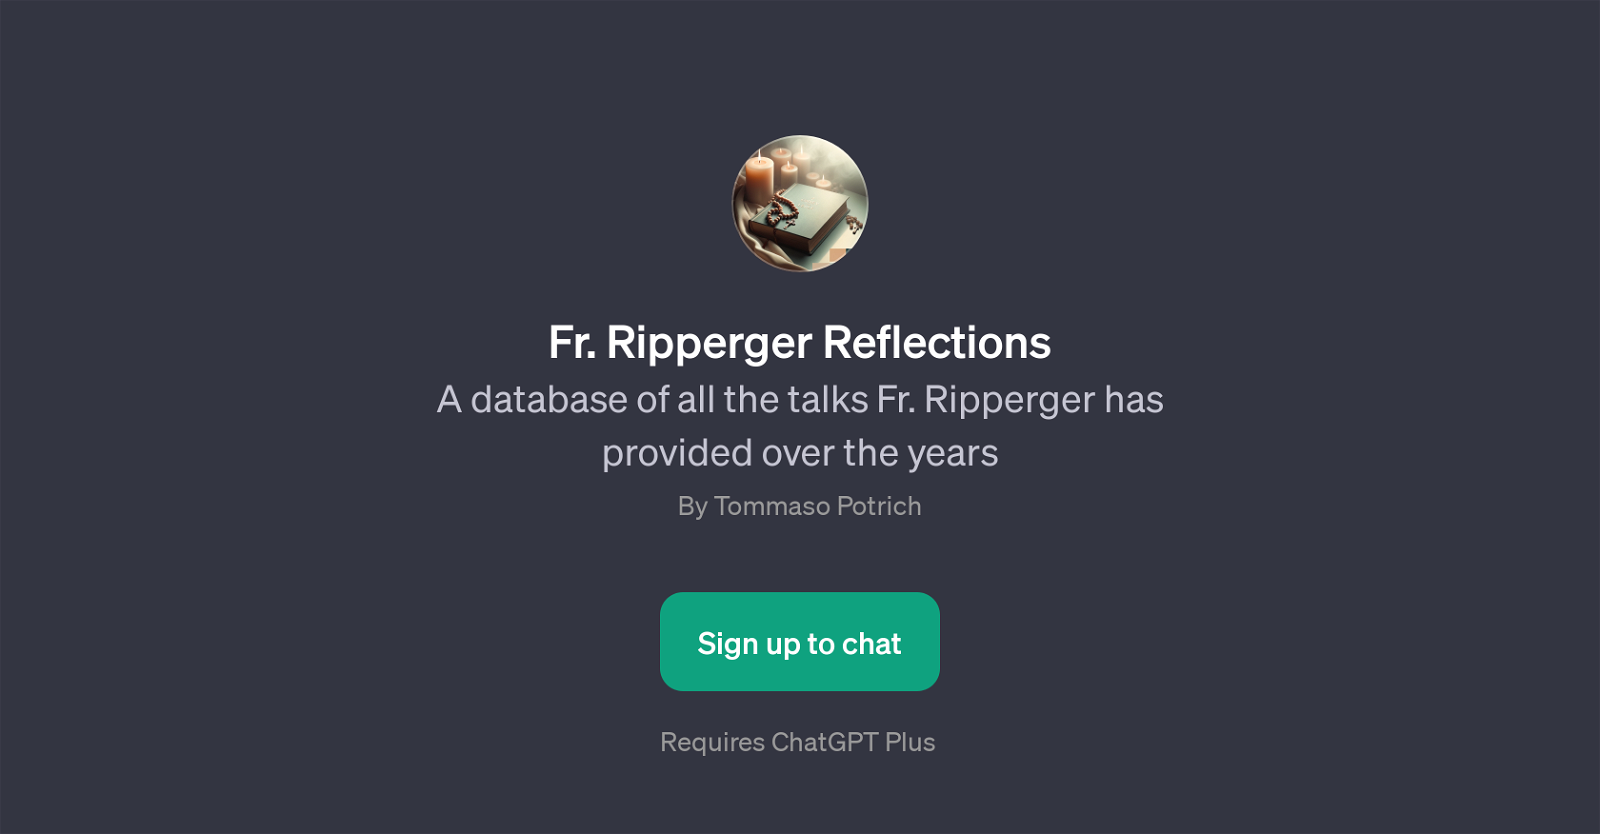 Fr. Ripperger Reflections website